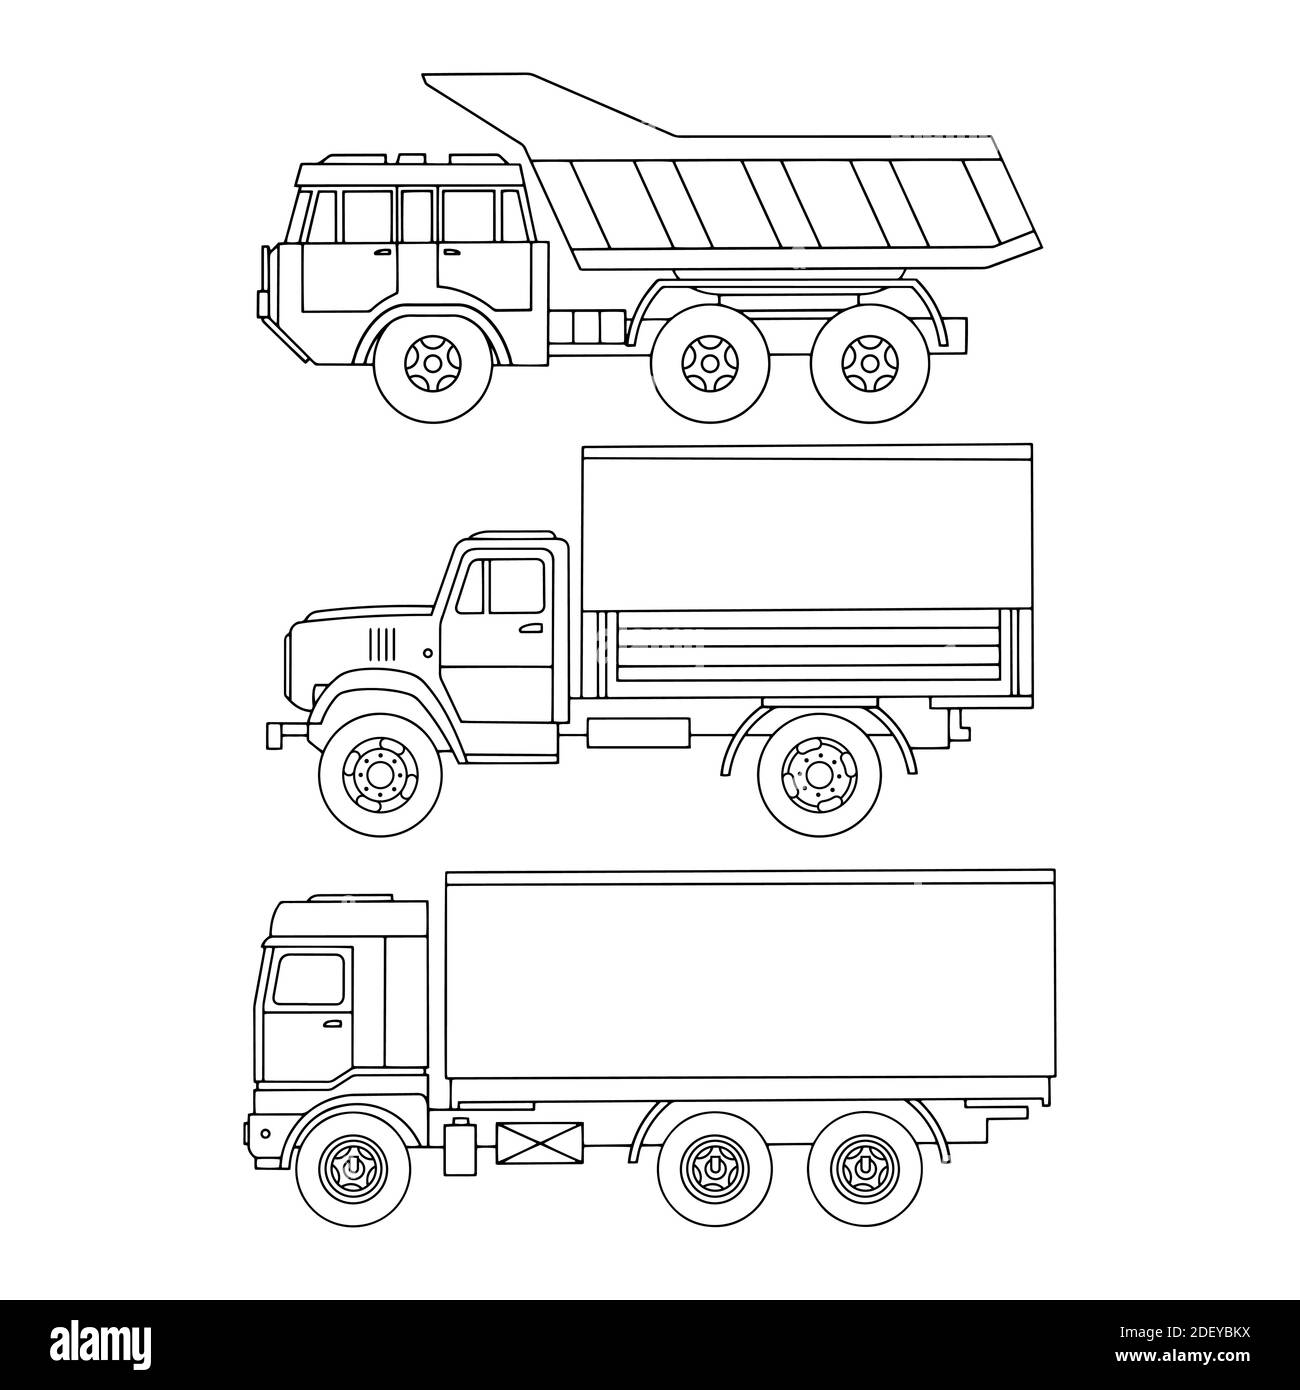 Trucks outline set. For coloring books. Vector illustration. Stock Vector